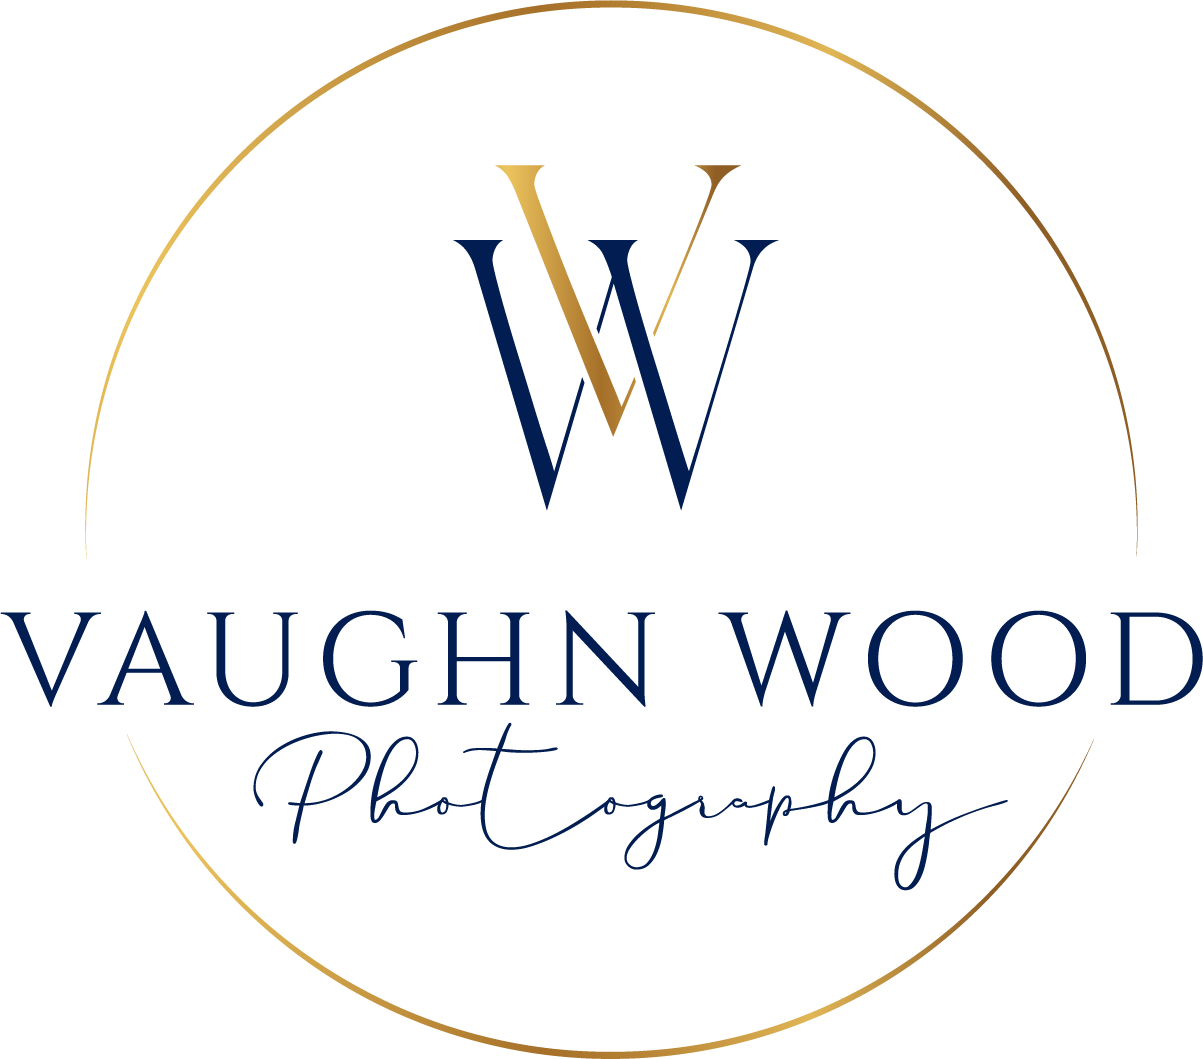 Vaughn Wood Photography